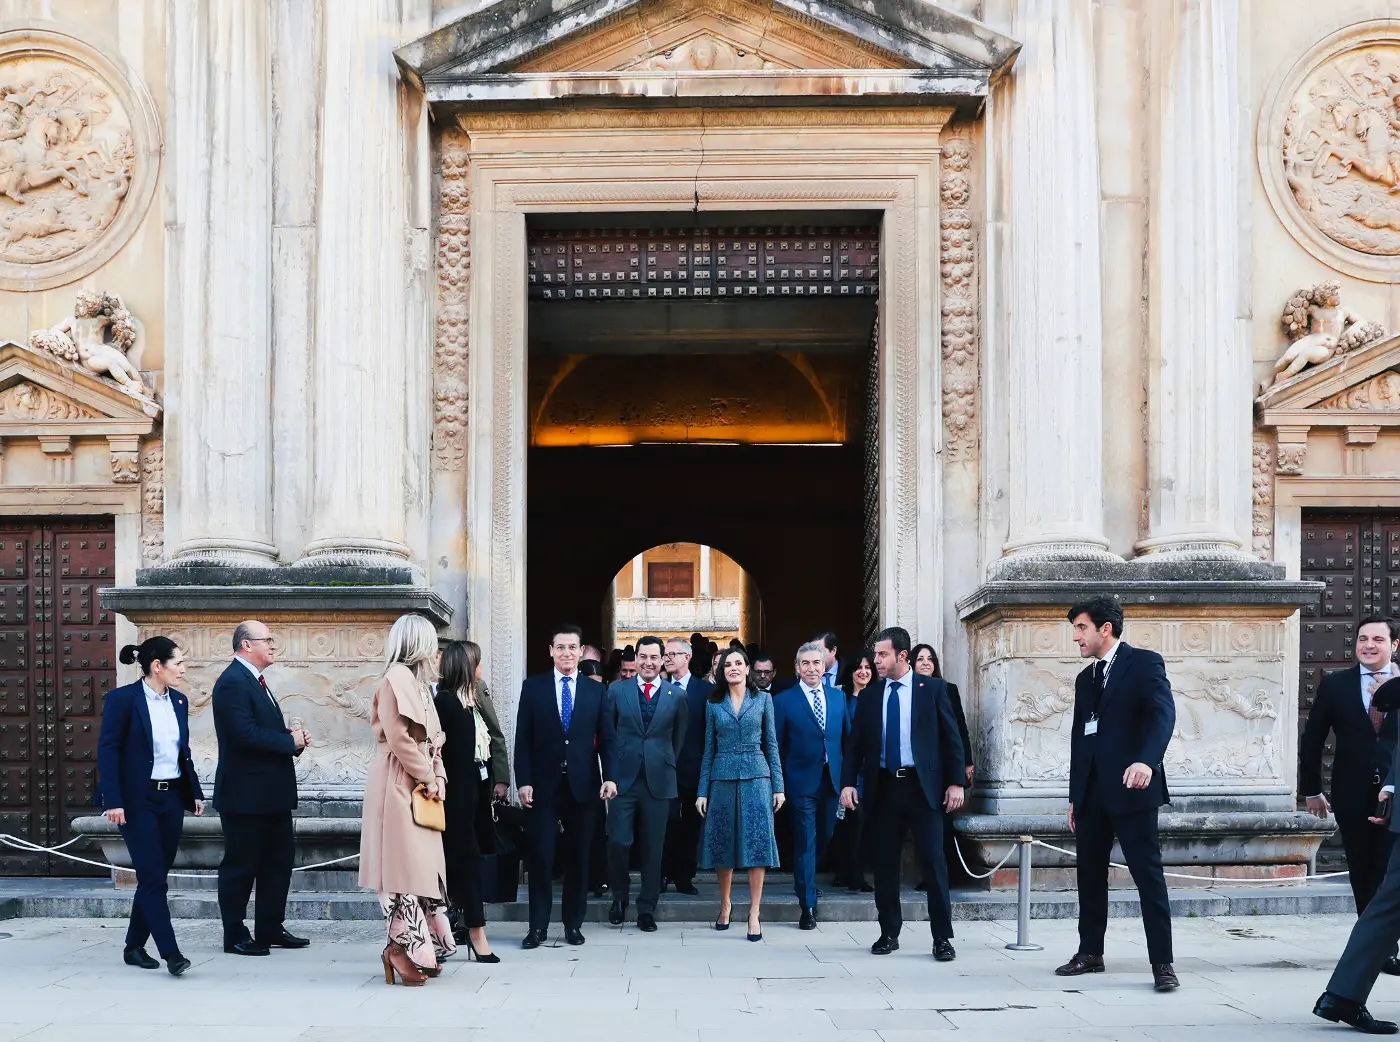 Queen Letizia of Spain visited an Exhibition in Granada